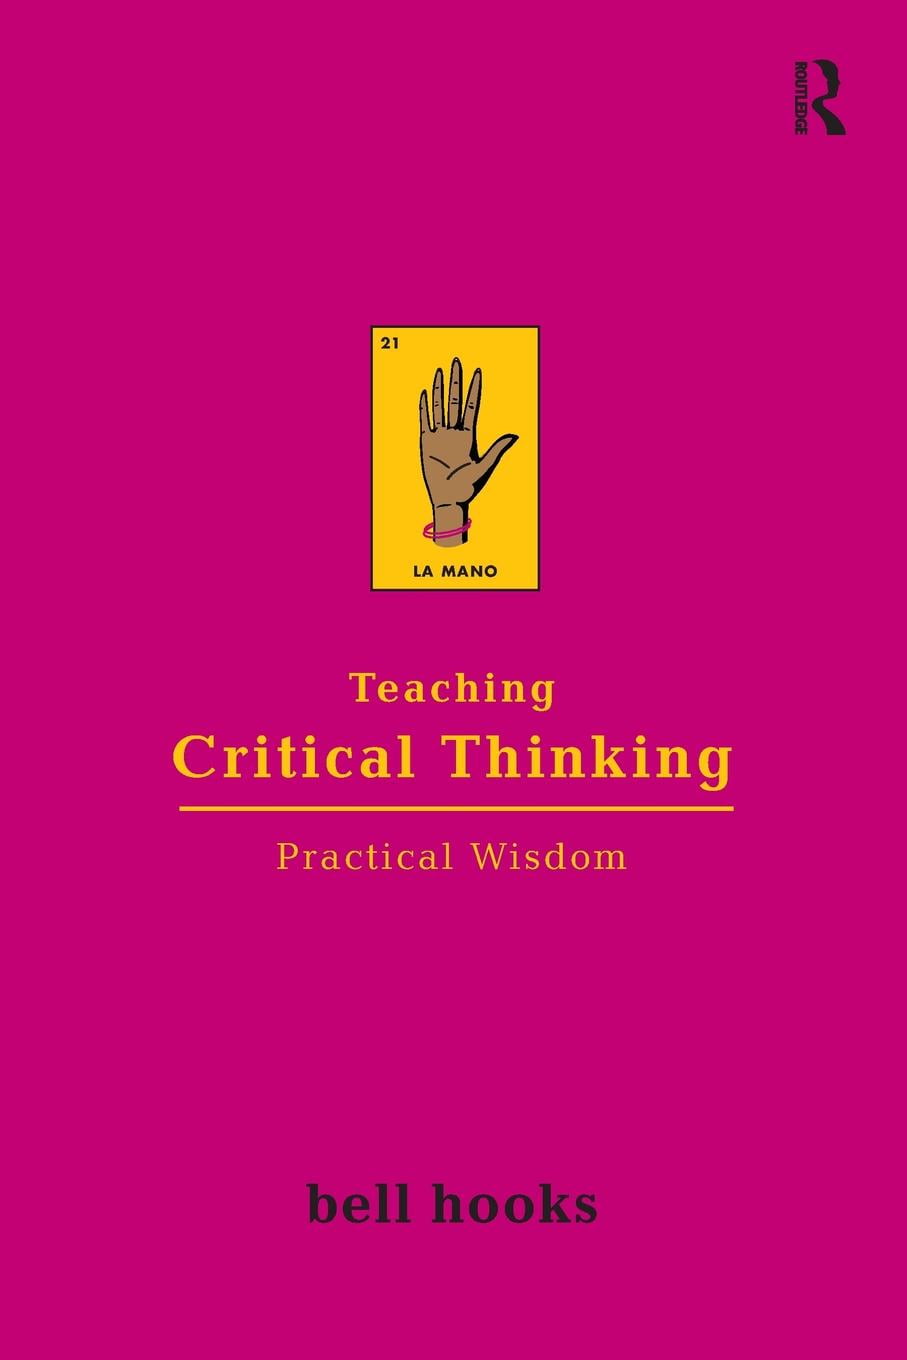 teaching critical thinking bell hooks pdf